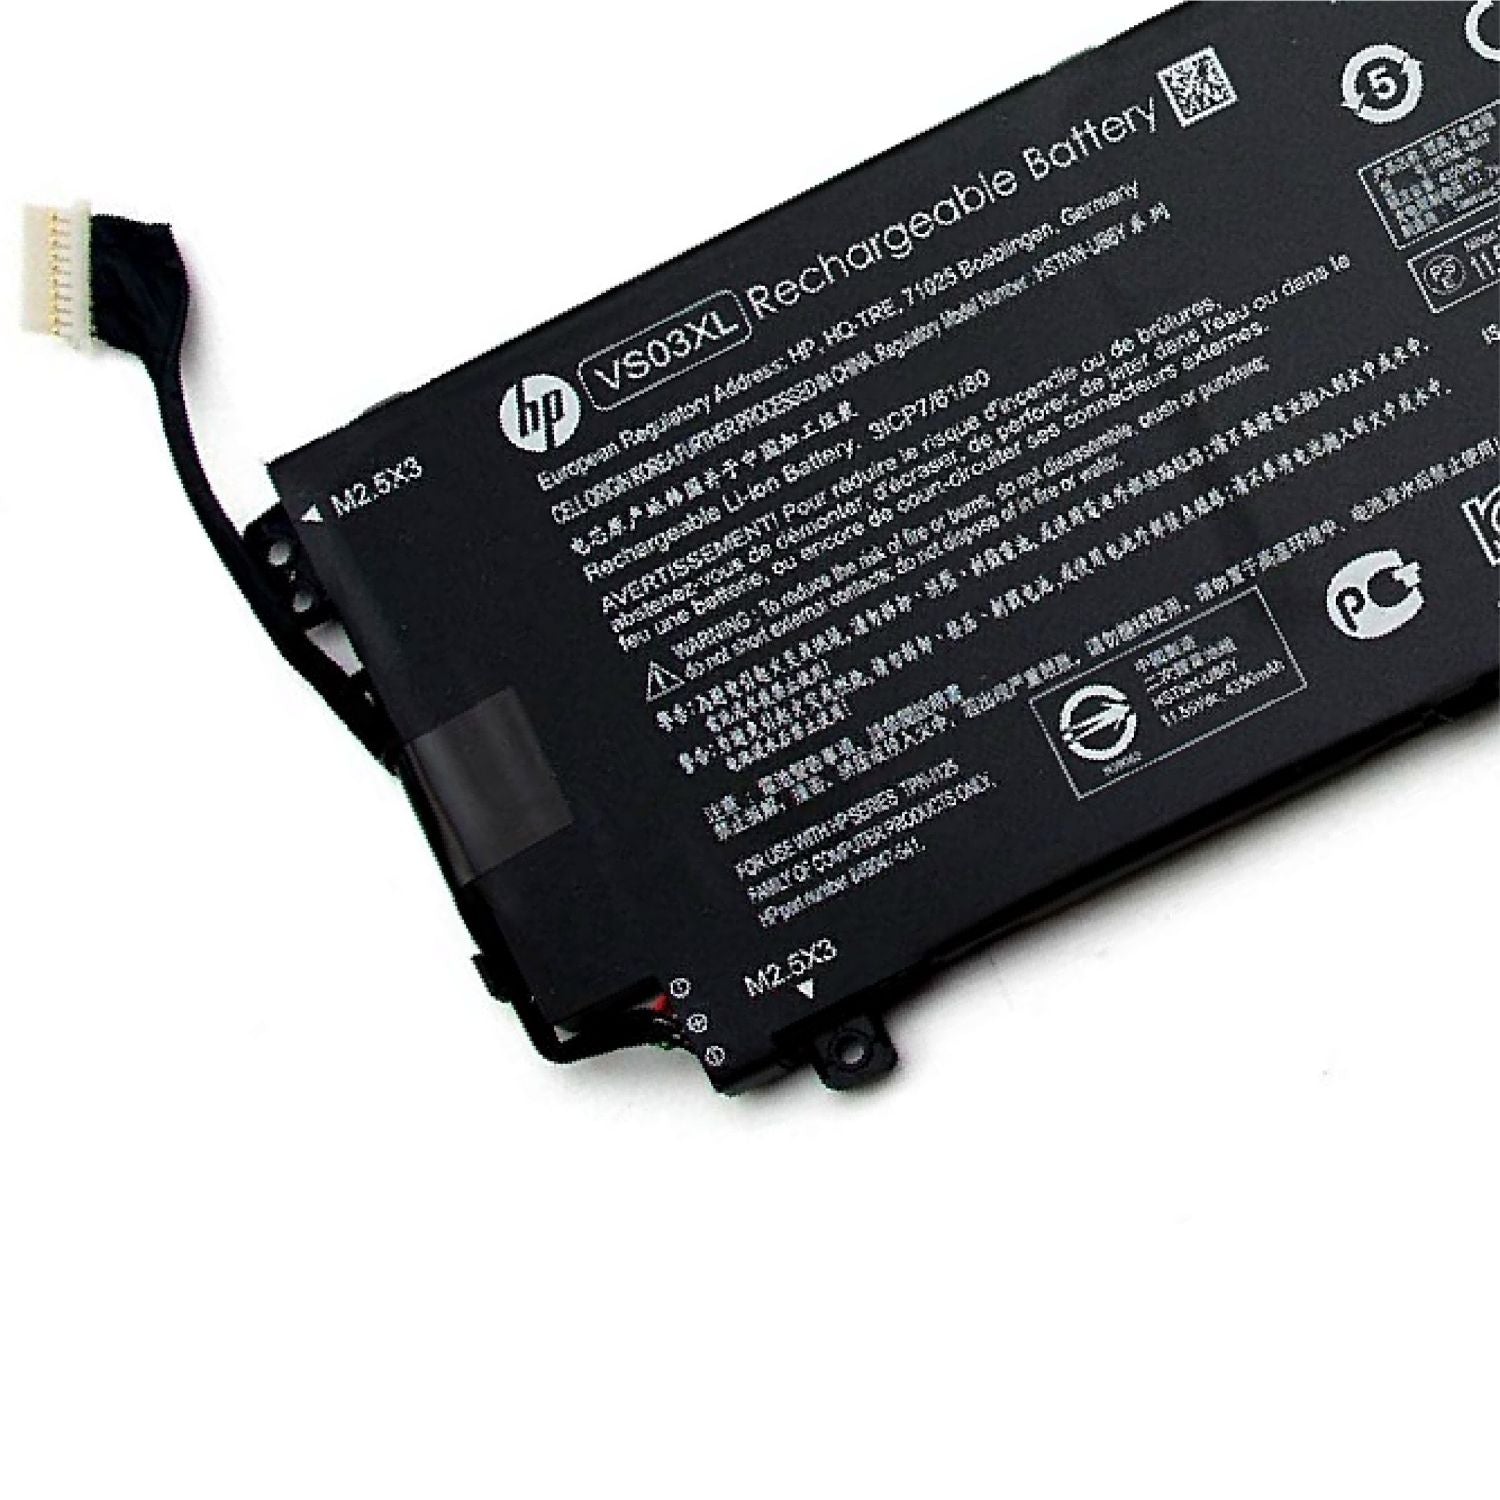 HP VS03XL Original Battery for HP Envy 15T-AS000 15T-AS100 15T-AS100 CTO 15-AS 15-AS133CL X6V56UA 15-AS020NR 15-AS152NR 15-AS043CL 15-AS002LA 15-AS004LA 15-AS014WM HSTNN-UB6Y 849047-541 849313-850 3ICP7/61/80 Laptop Serie's